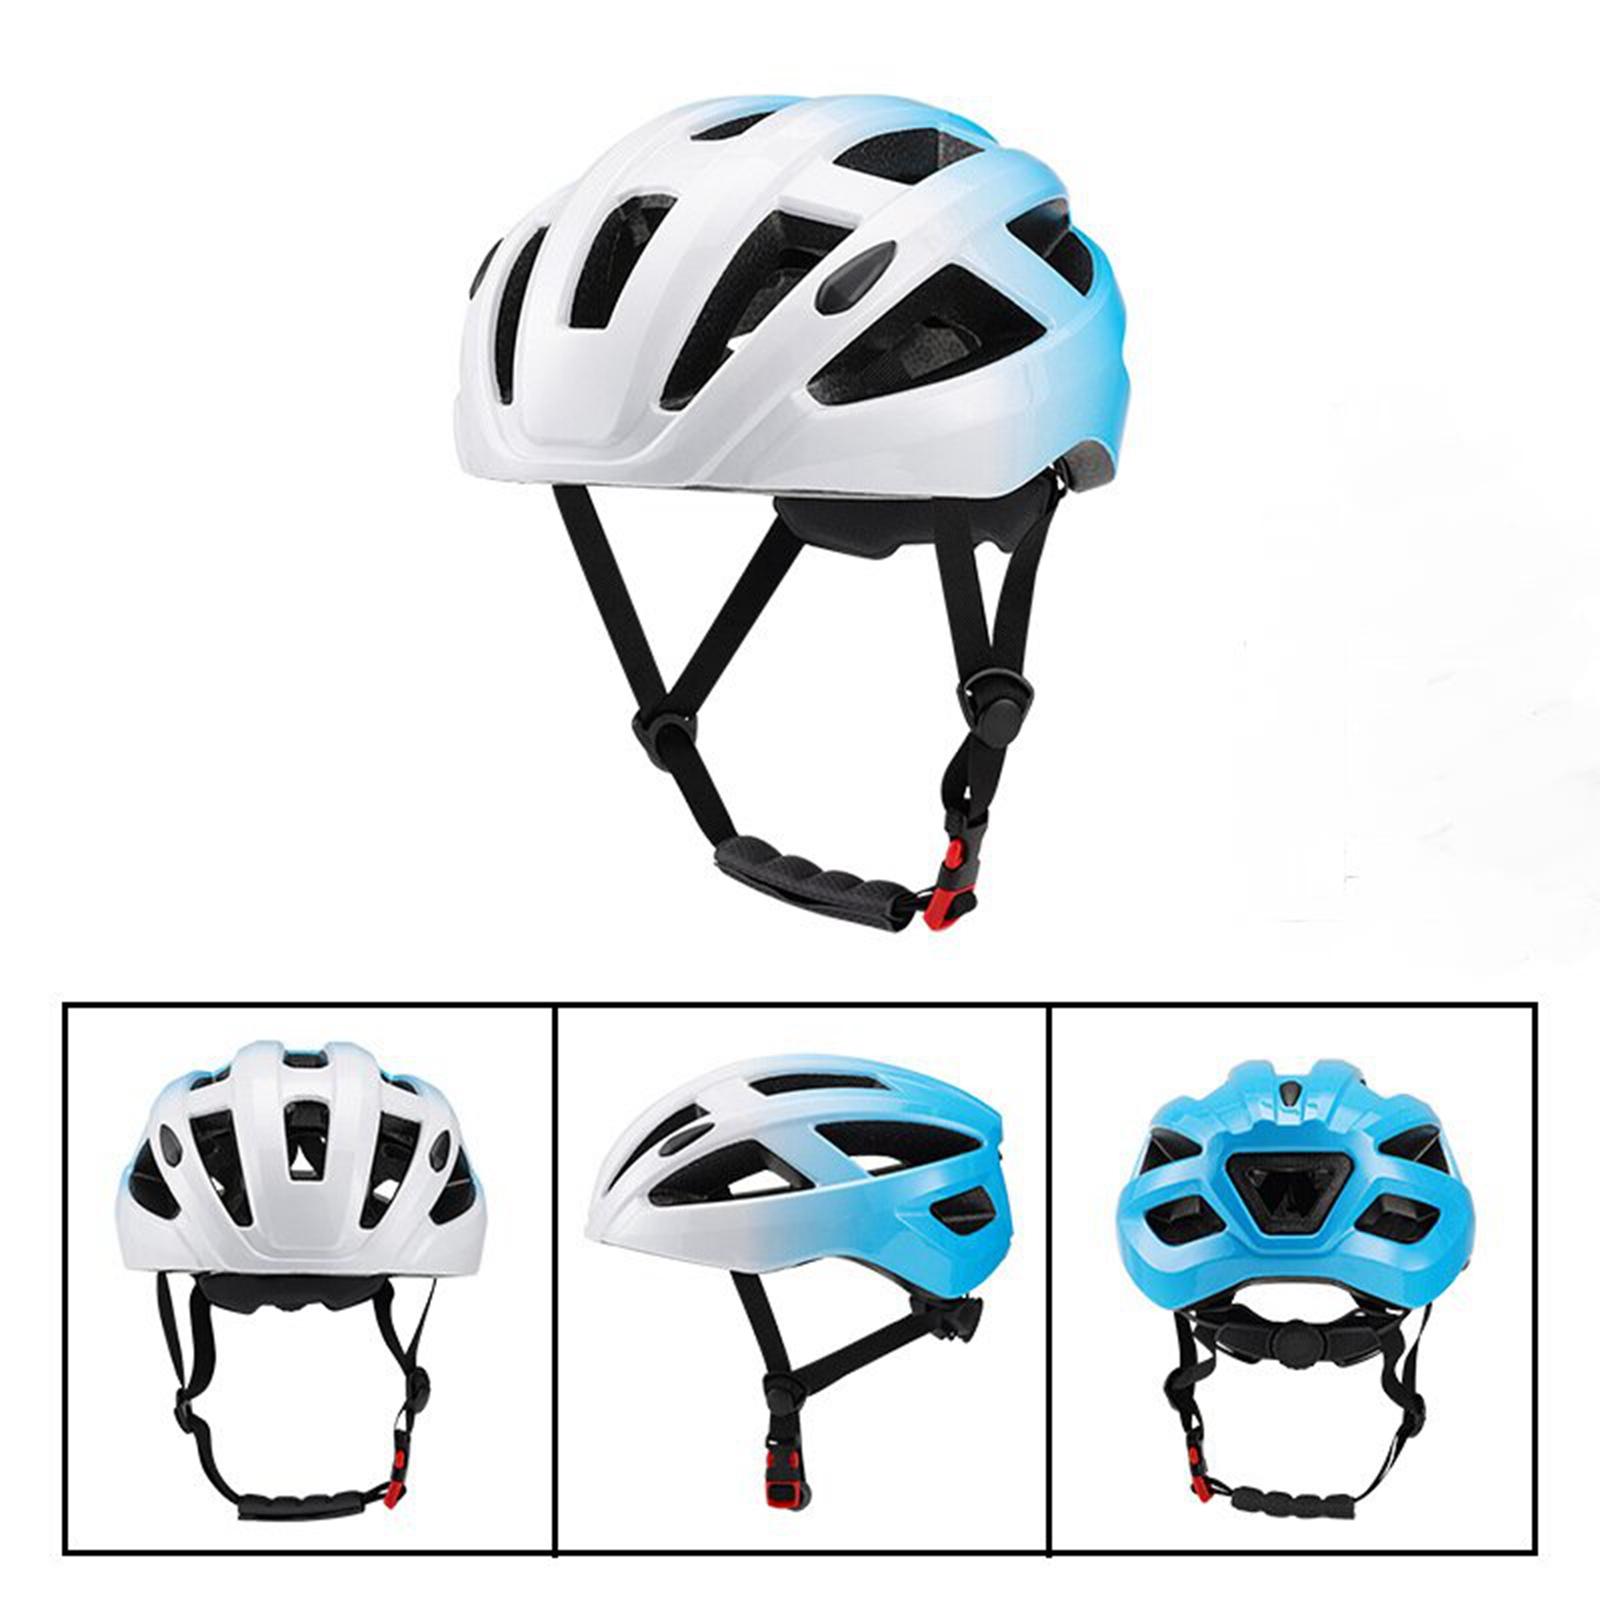 Mountain Bike Helmet 11 Vents Cycling Accessories Modern Cycling Bike Helmet blue